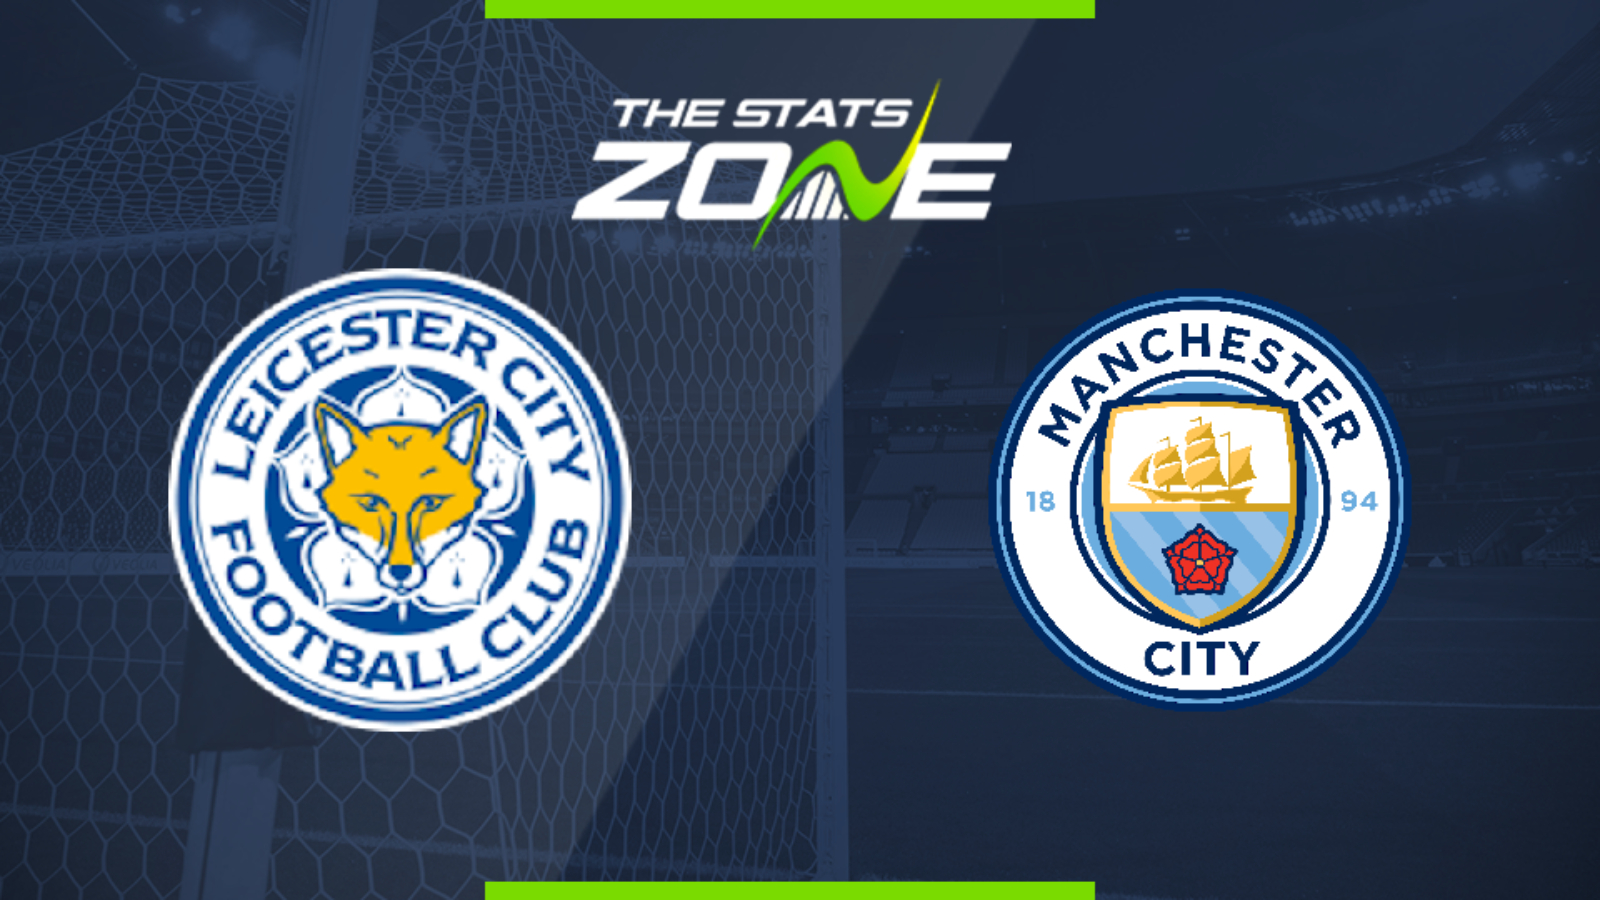 2019 20 Premier League Leicester Vs Man City Preview Prediction The Stats Zone